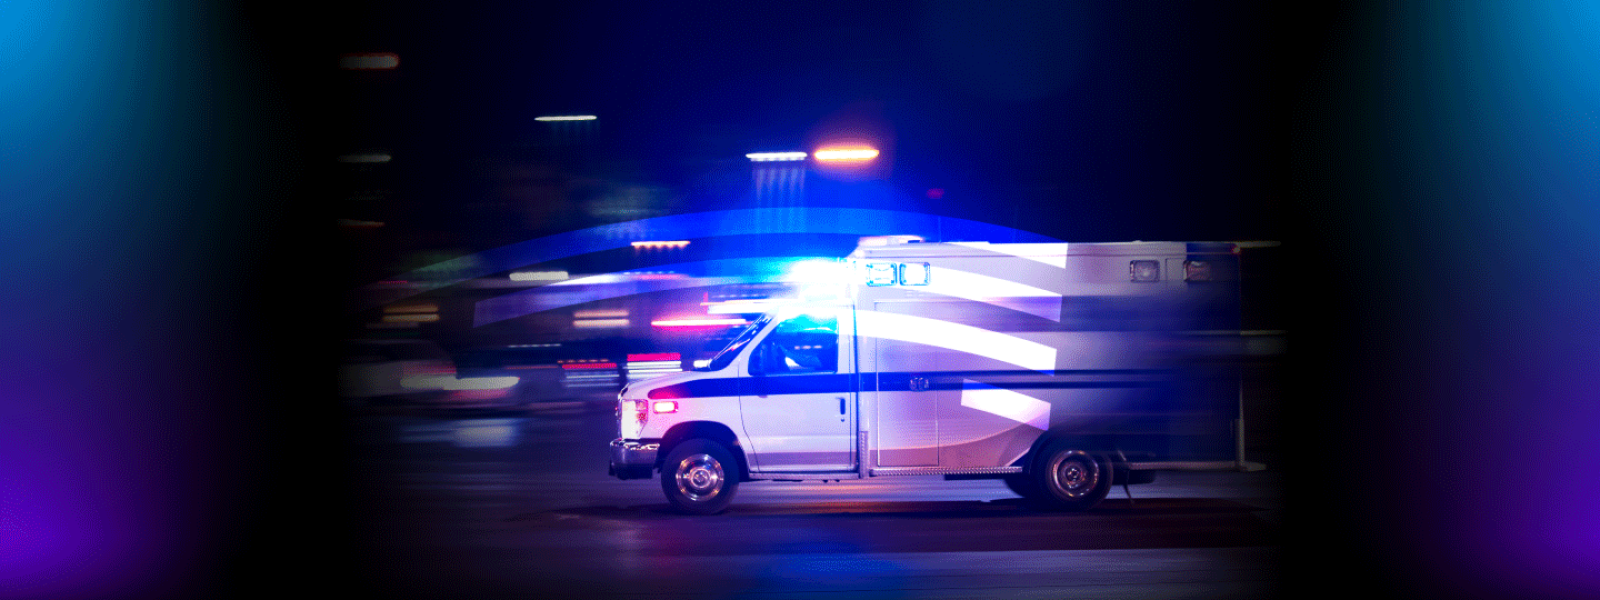 Moving ambulance with flashing lights